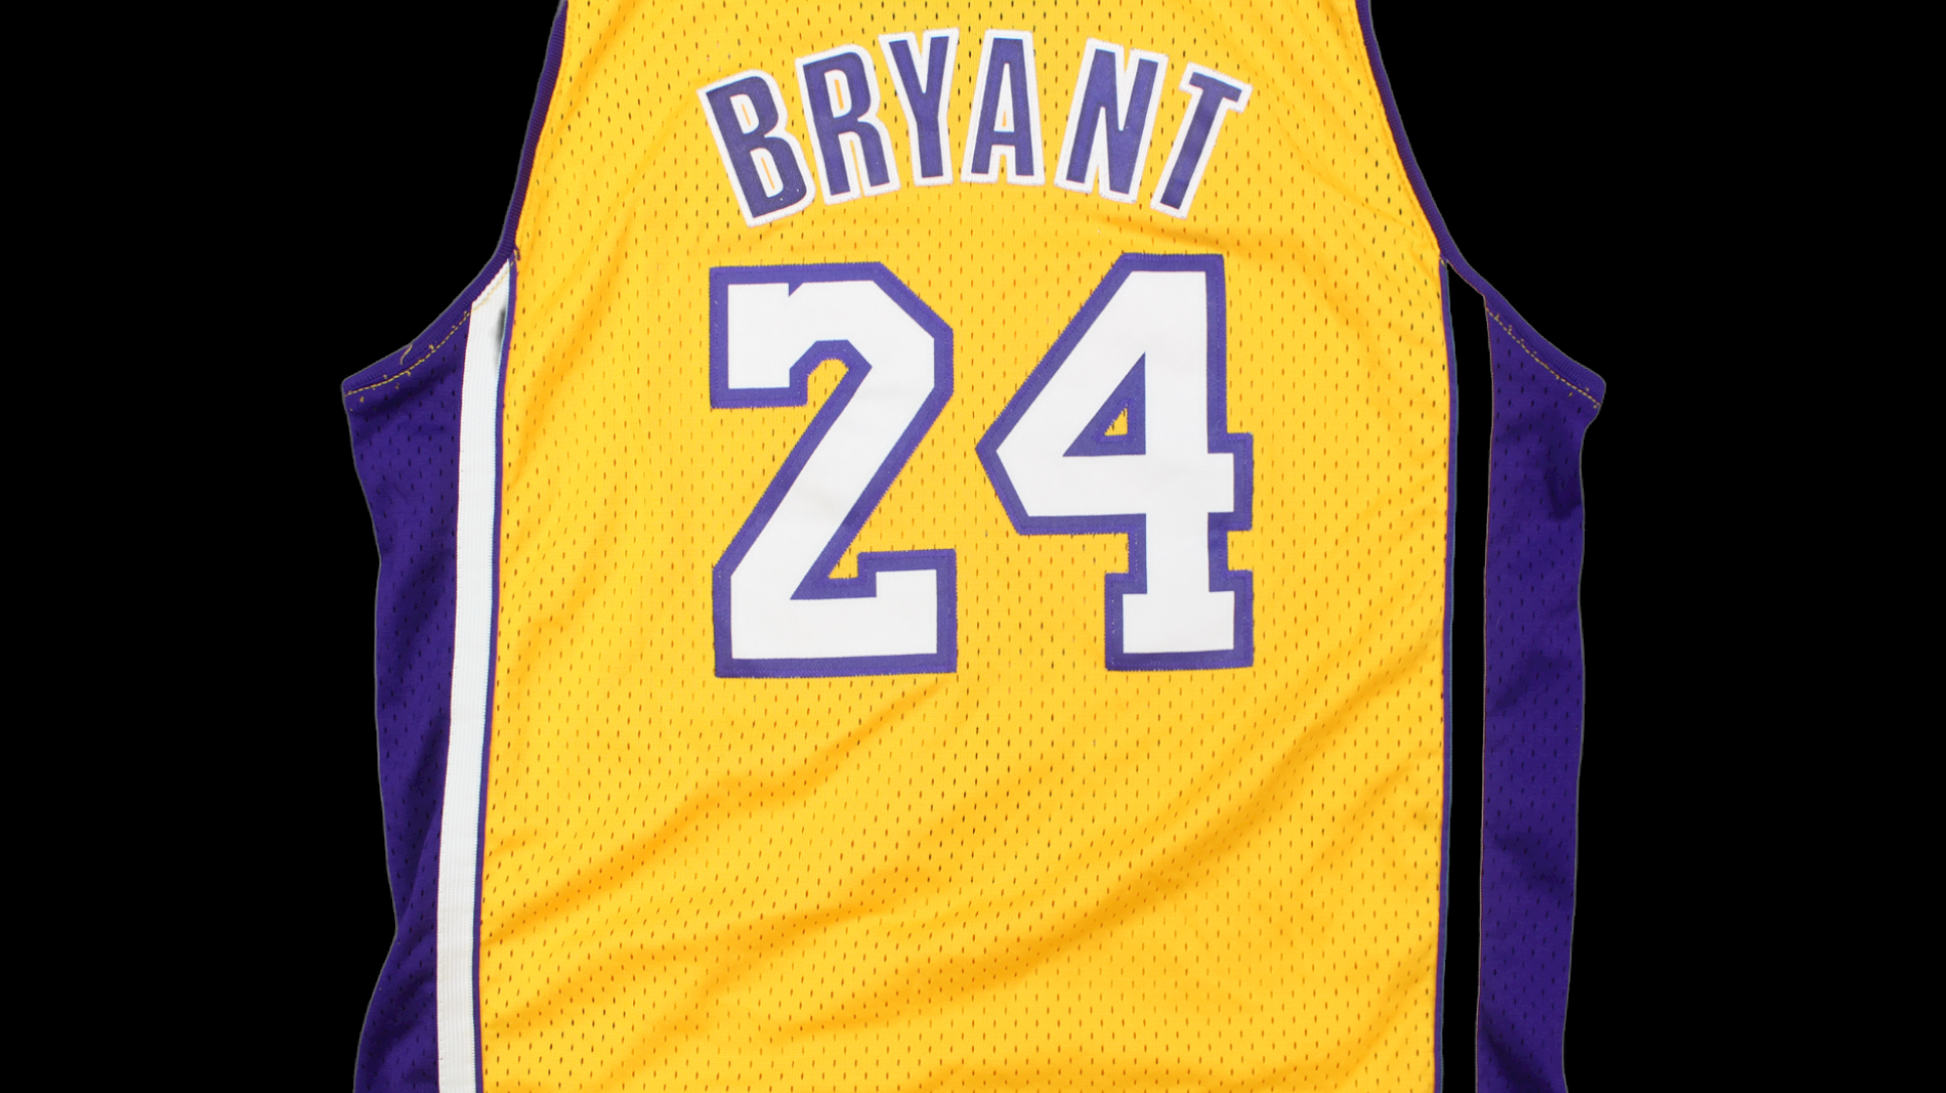 Kobe Bryant Los Angeles Lakers Adidas jersey – Thriller